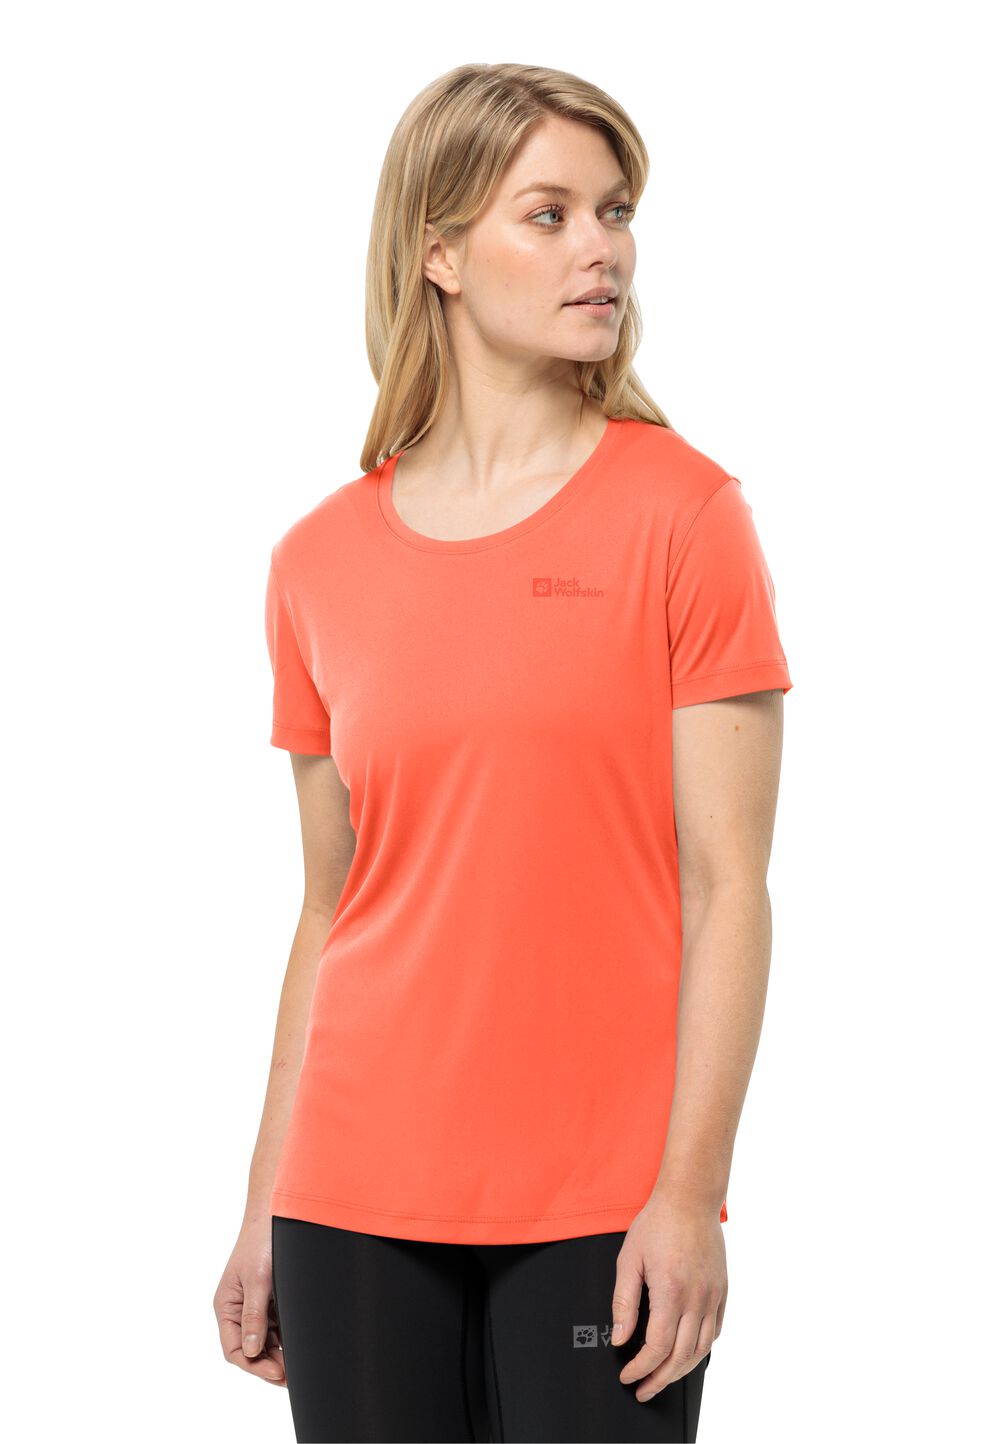 Jack Wolfskin Tech T-Shirt Women Functioneel shirt Dames M rood digital orange